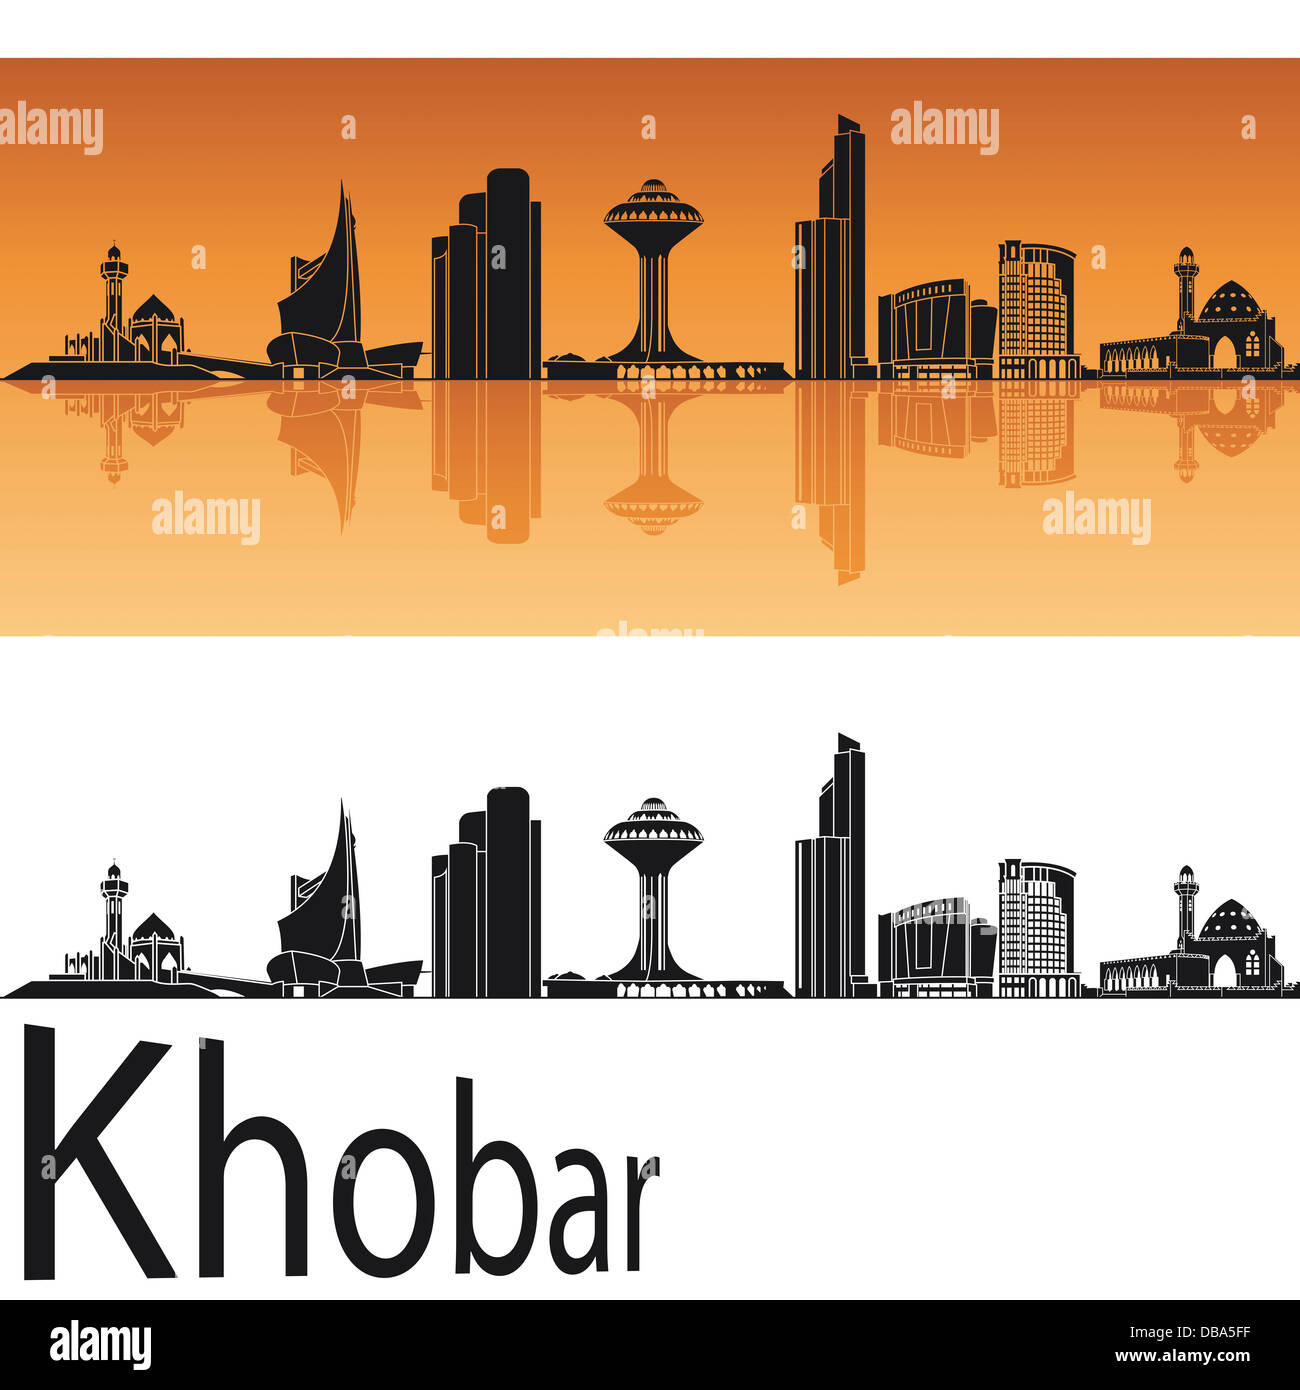 Khobar skyline in orange background Stock Photo